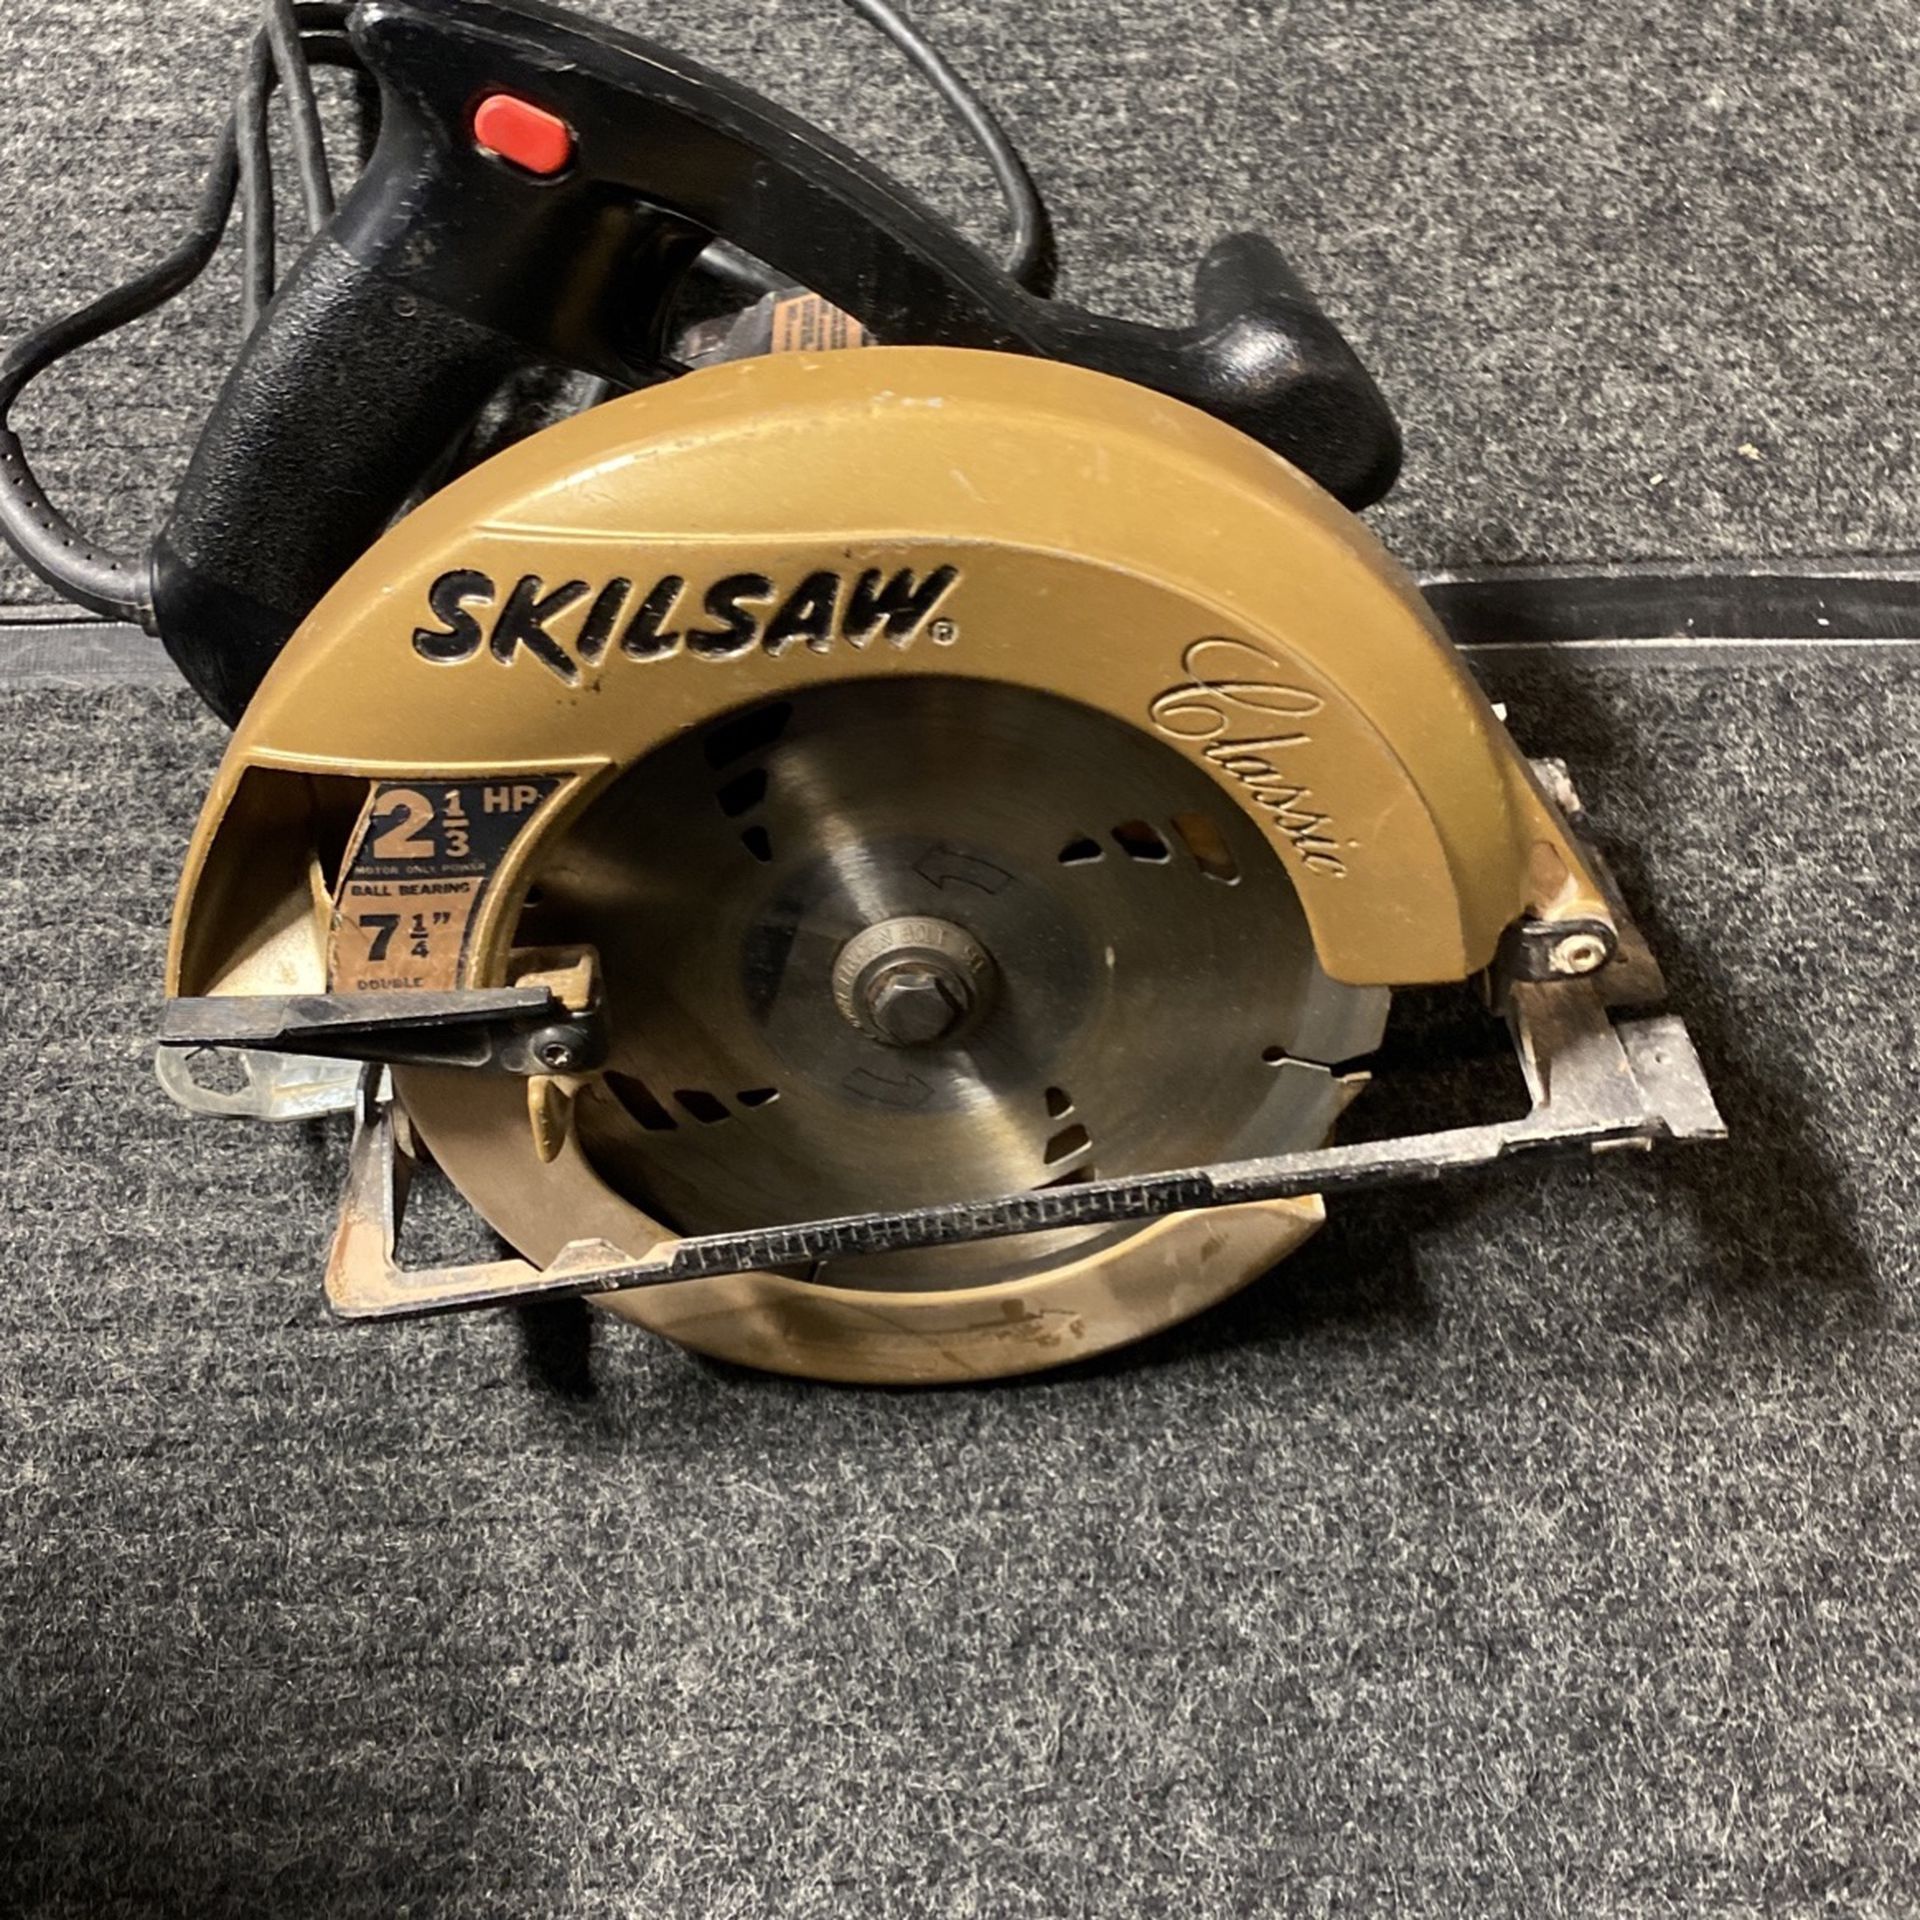 Skilsaw Classic 7 1/4” Circular Saw